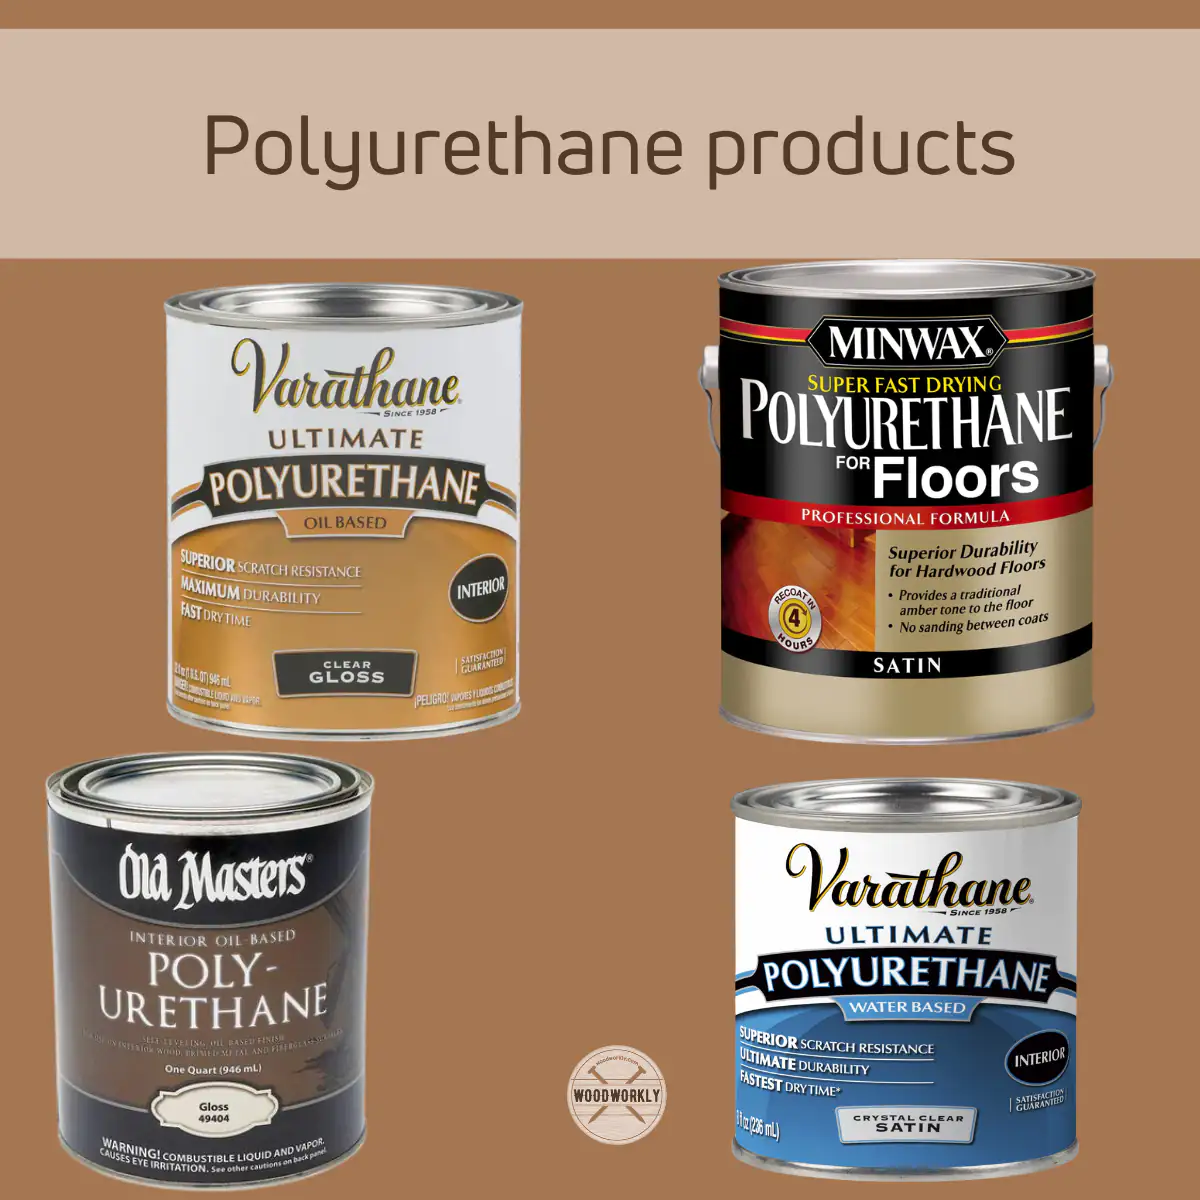 Polyurethane products